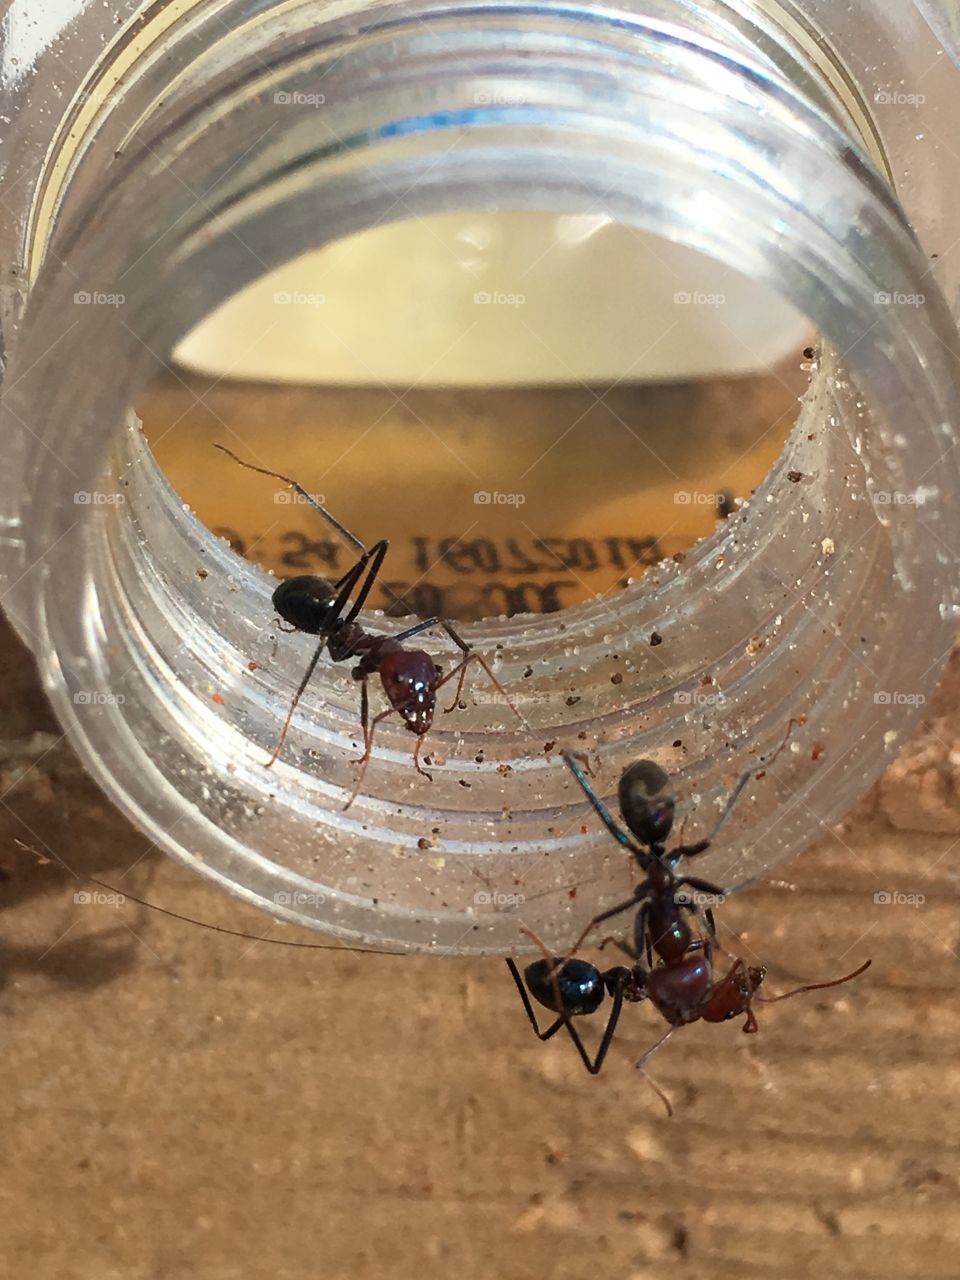 Three worker ants on rims of glass jar closeup full length 